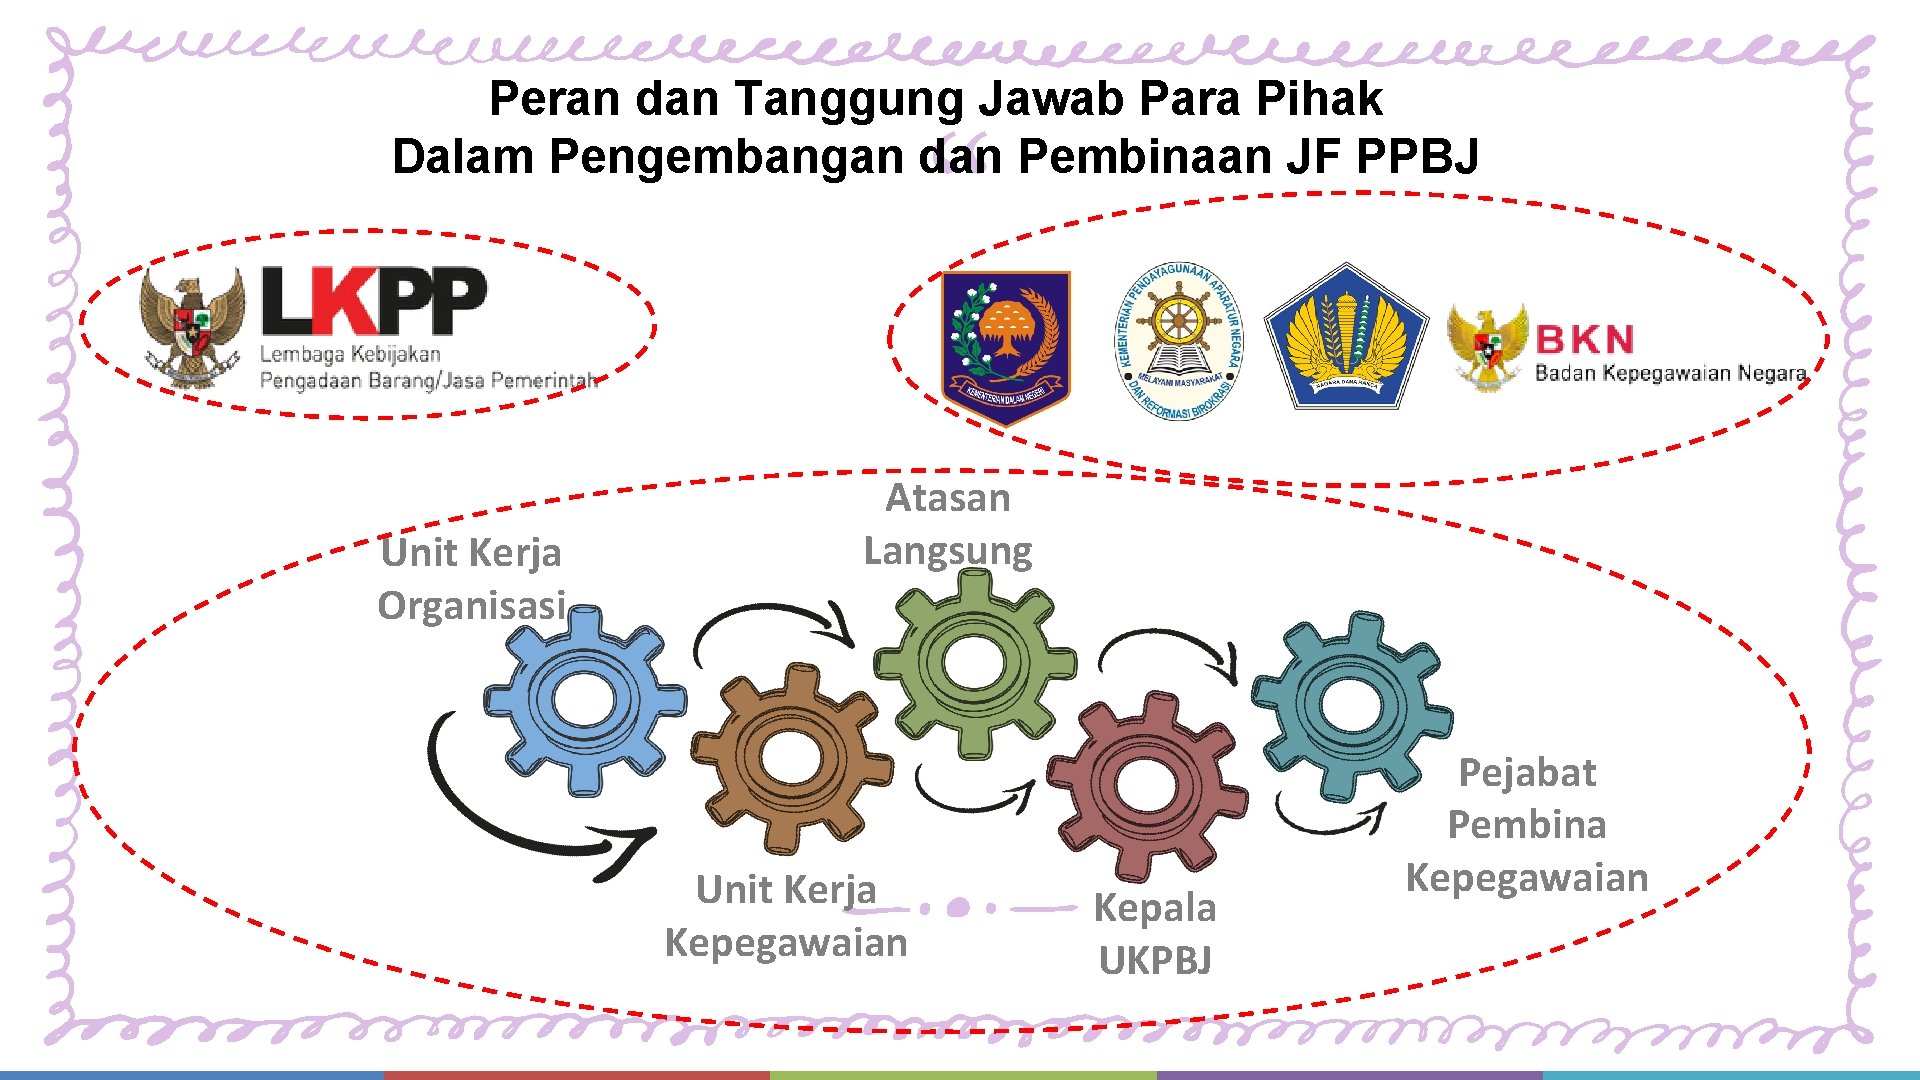 Peran dan Tanggung Jawab Para Pihak Dalam Pengembangan dan Pembinaan JF PPBJ “ Unit